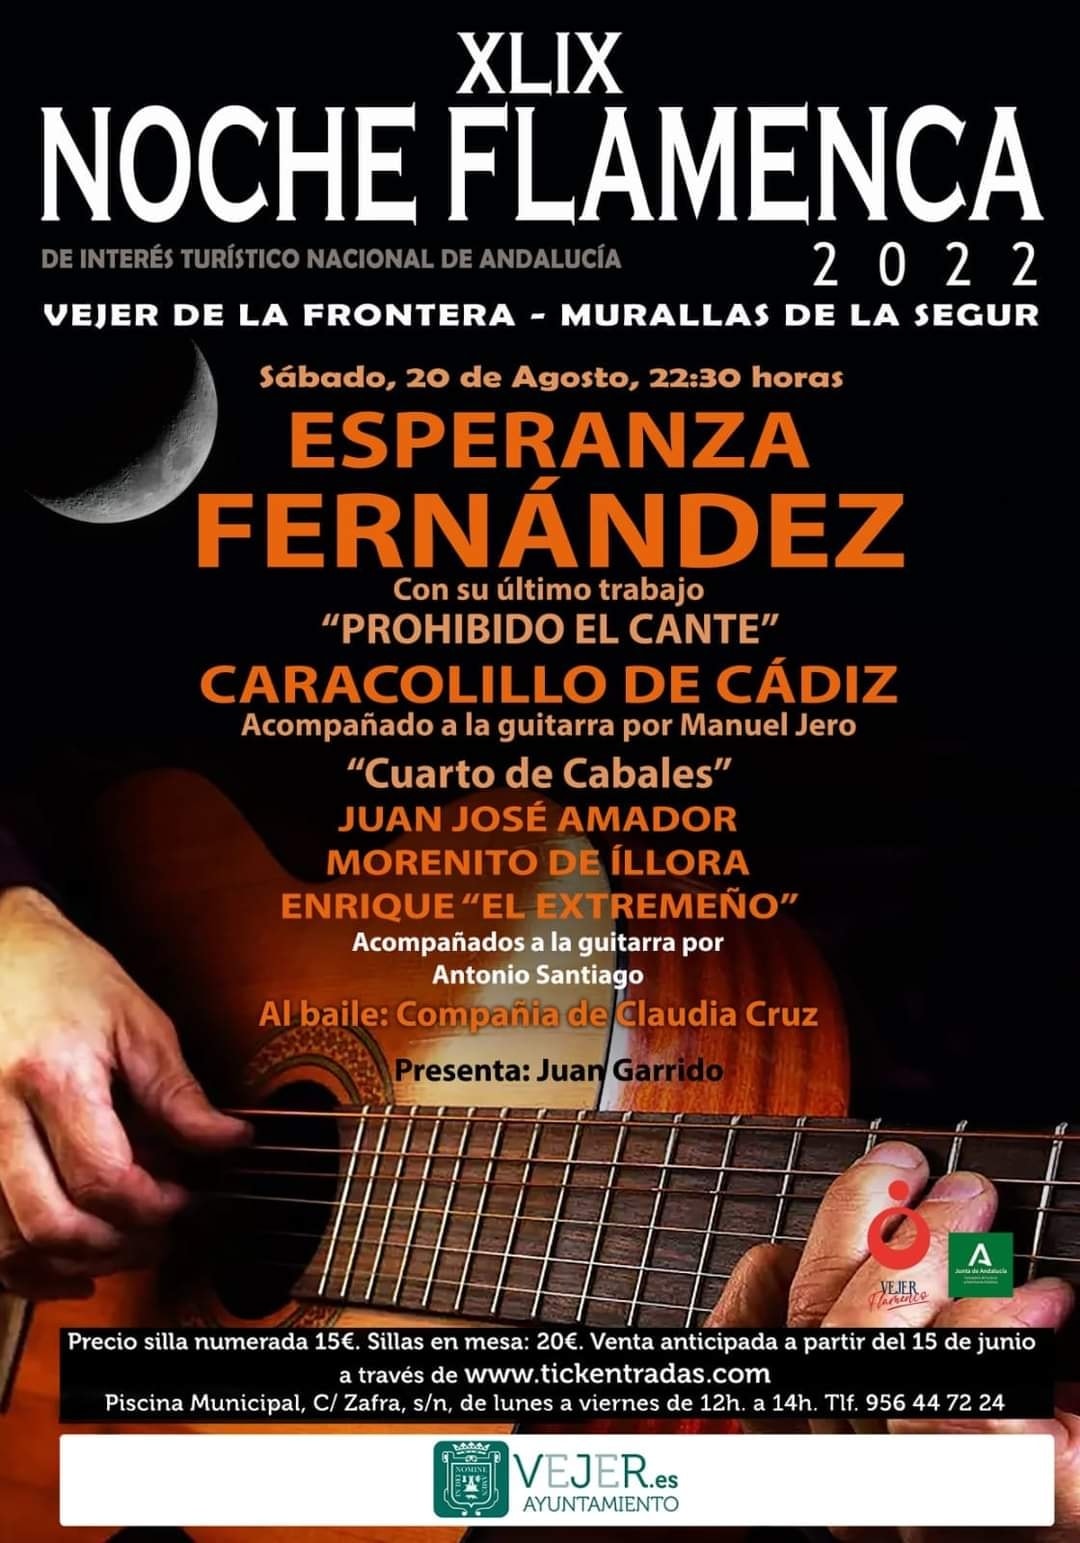 sites/default/files/2022/AGENDA/flamenco/noche-flamenca-vejer.jpg